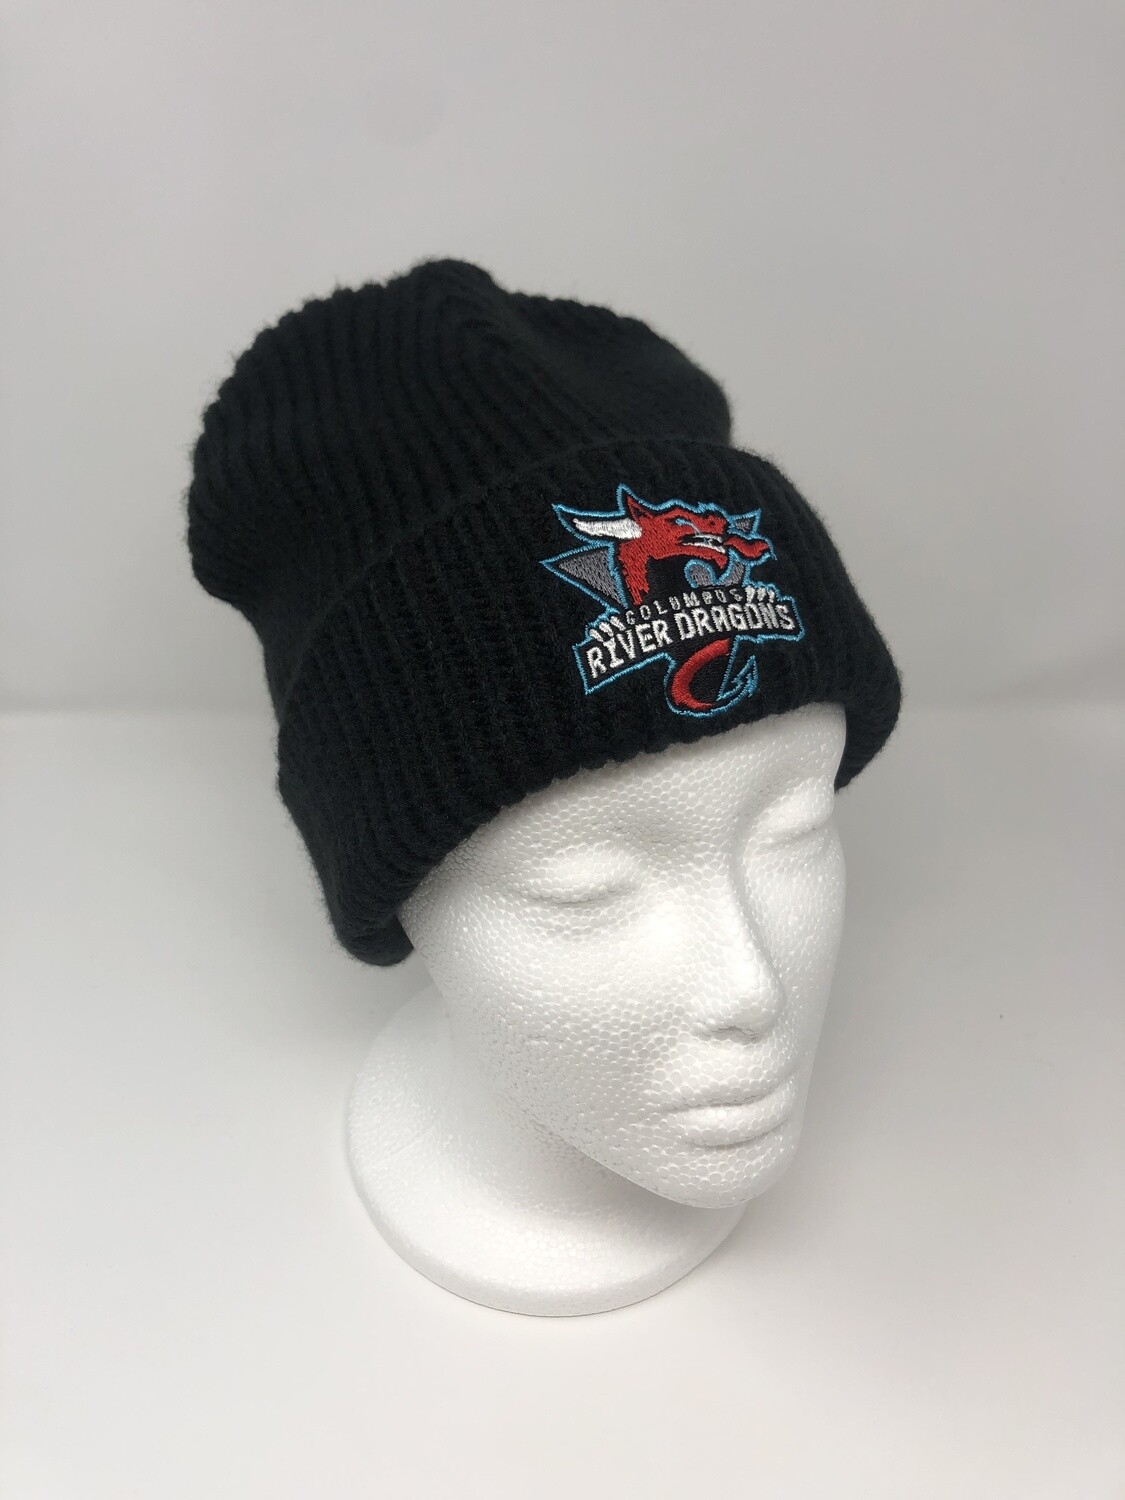 Main Logo Black Embroidered Beanie Hat